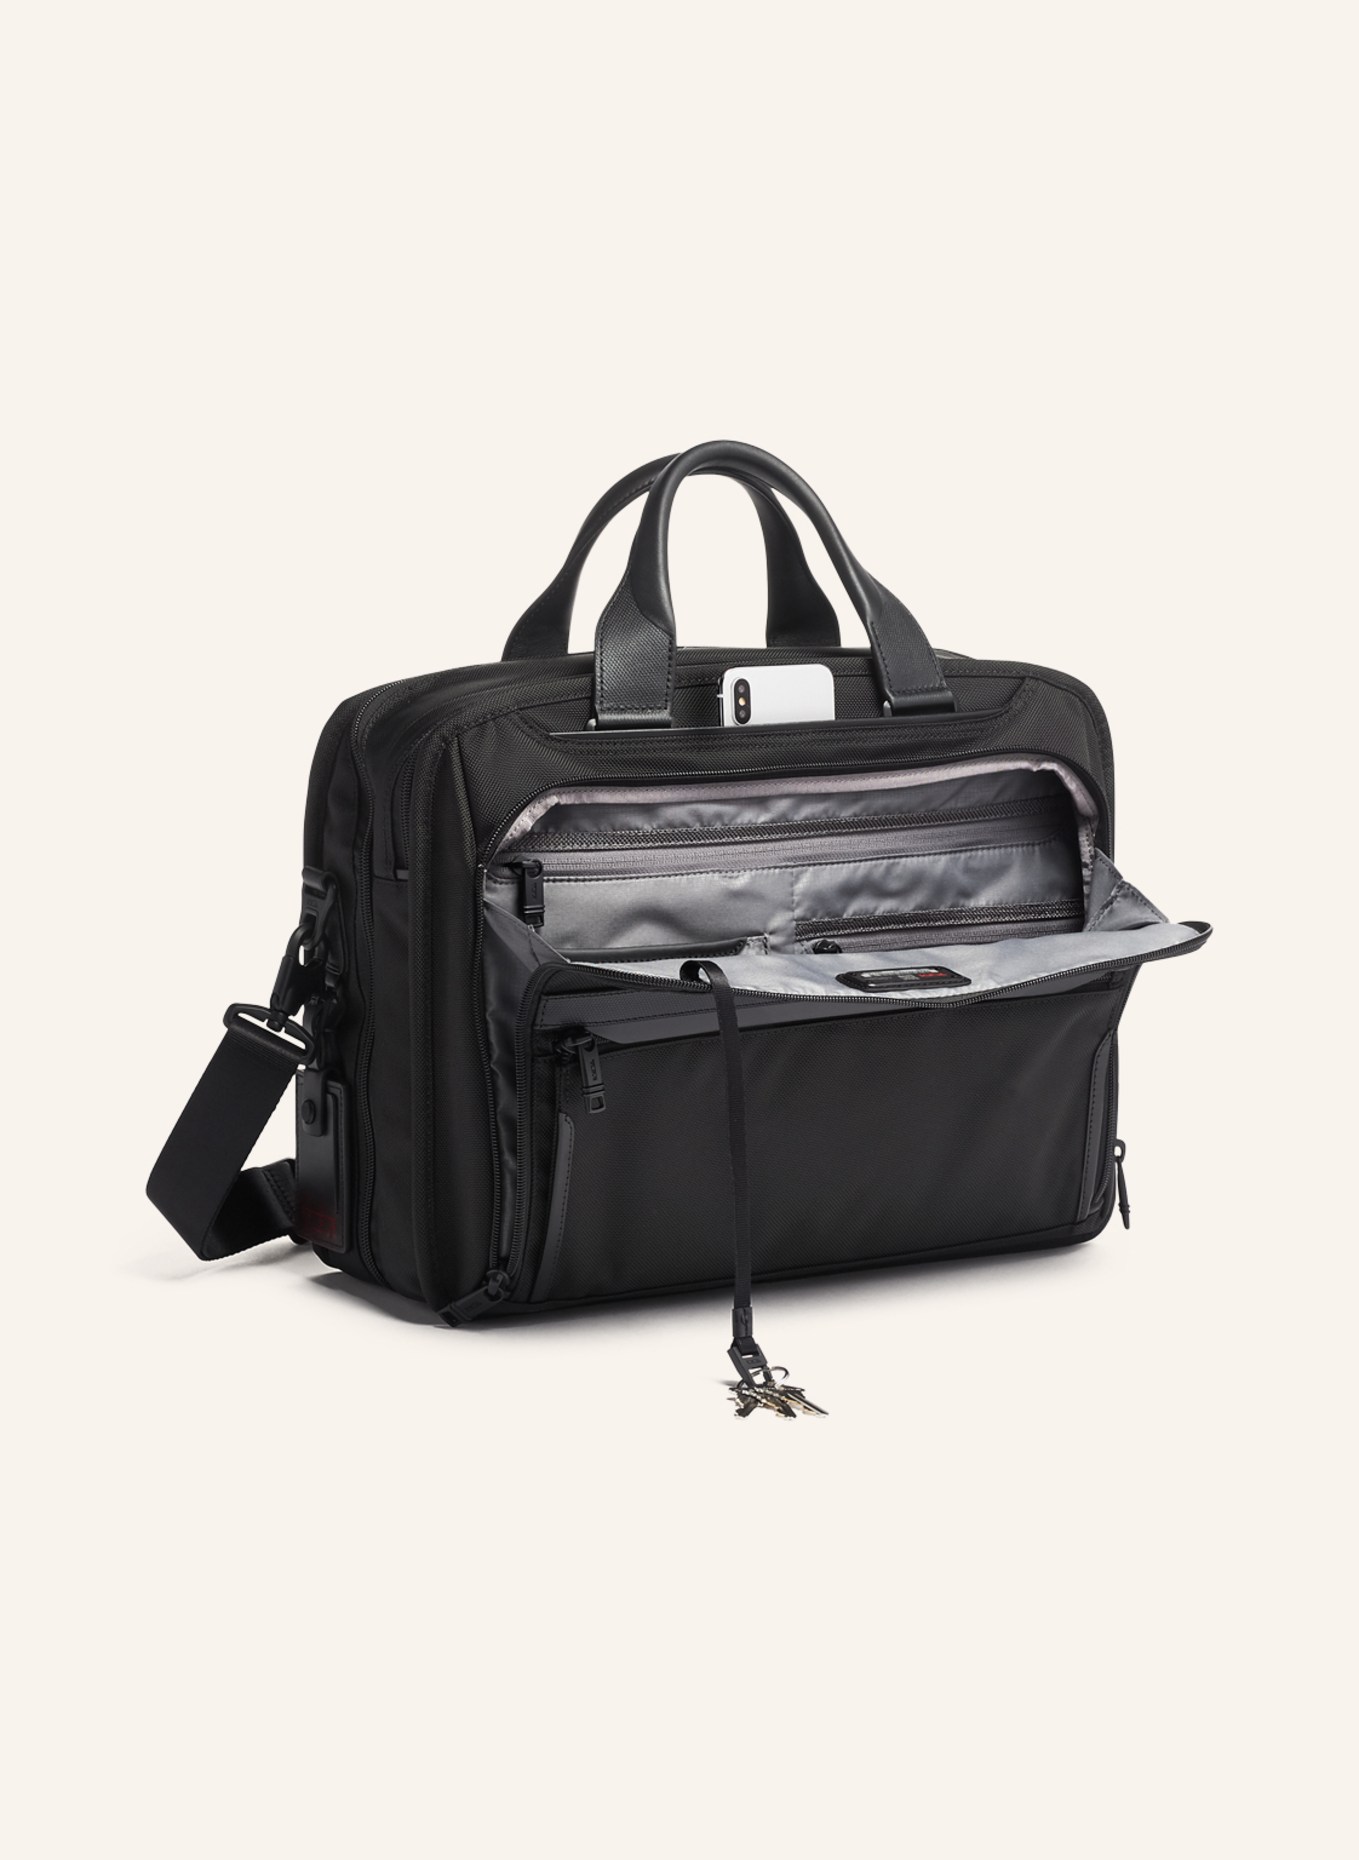 TUMI Parrish slim 15” laptop backpack 🎒 2013... - Depop